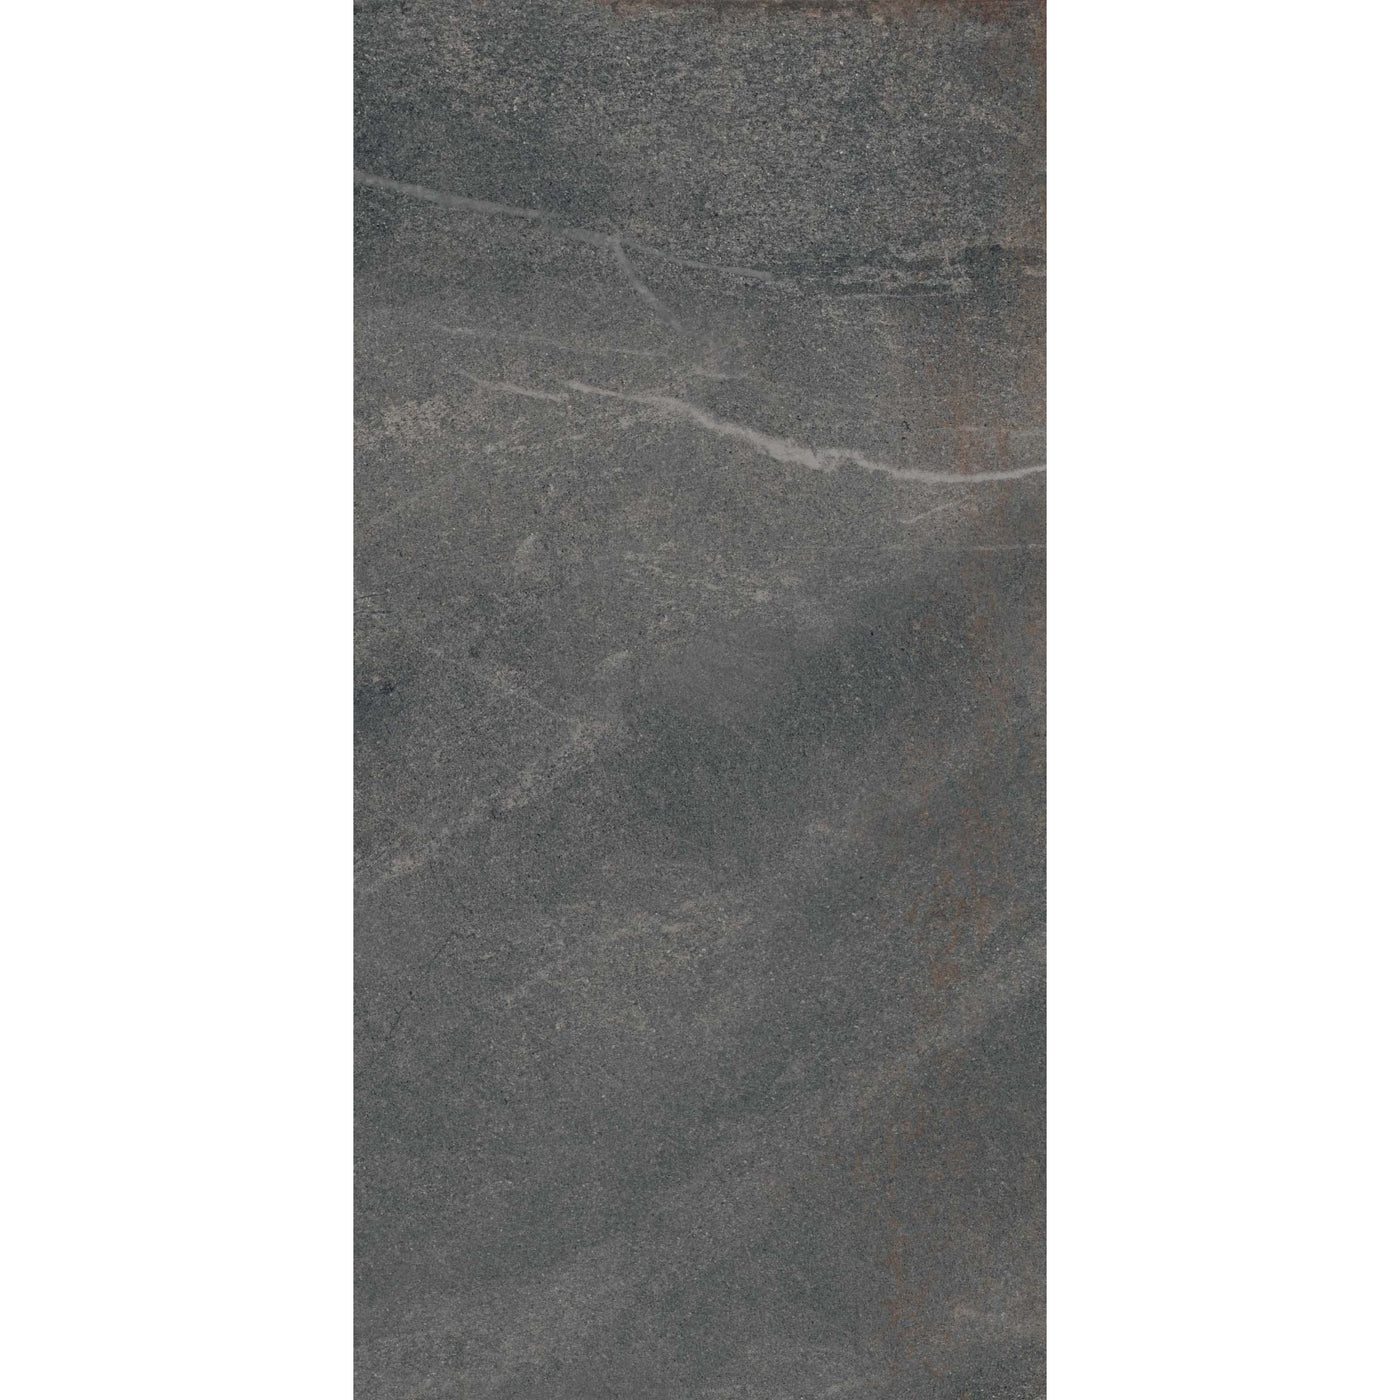 Smoke Grey - a dark stone effect tile creating a dramatic statement - Letta London - 